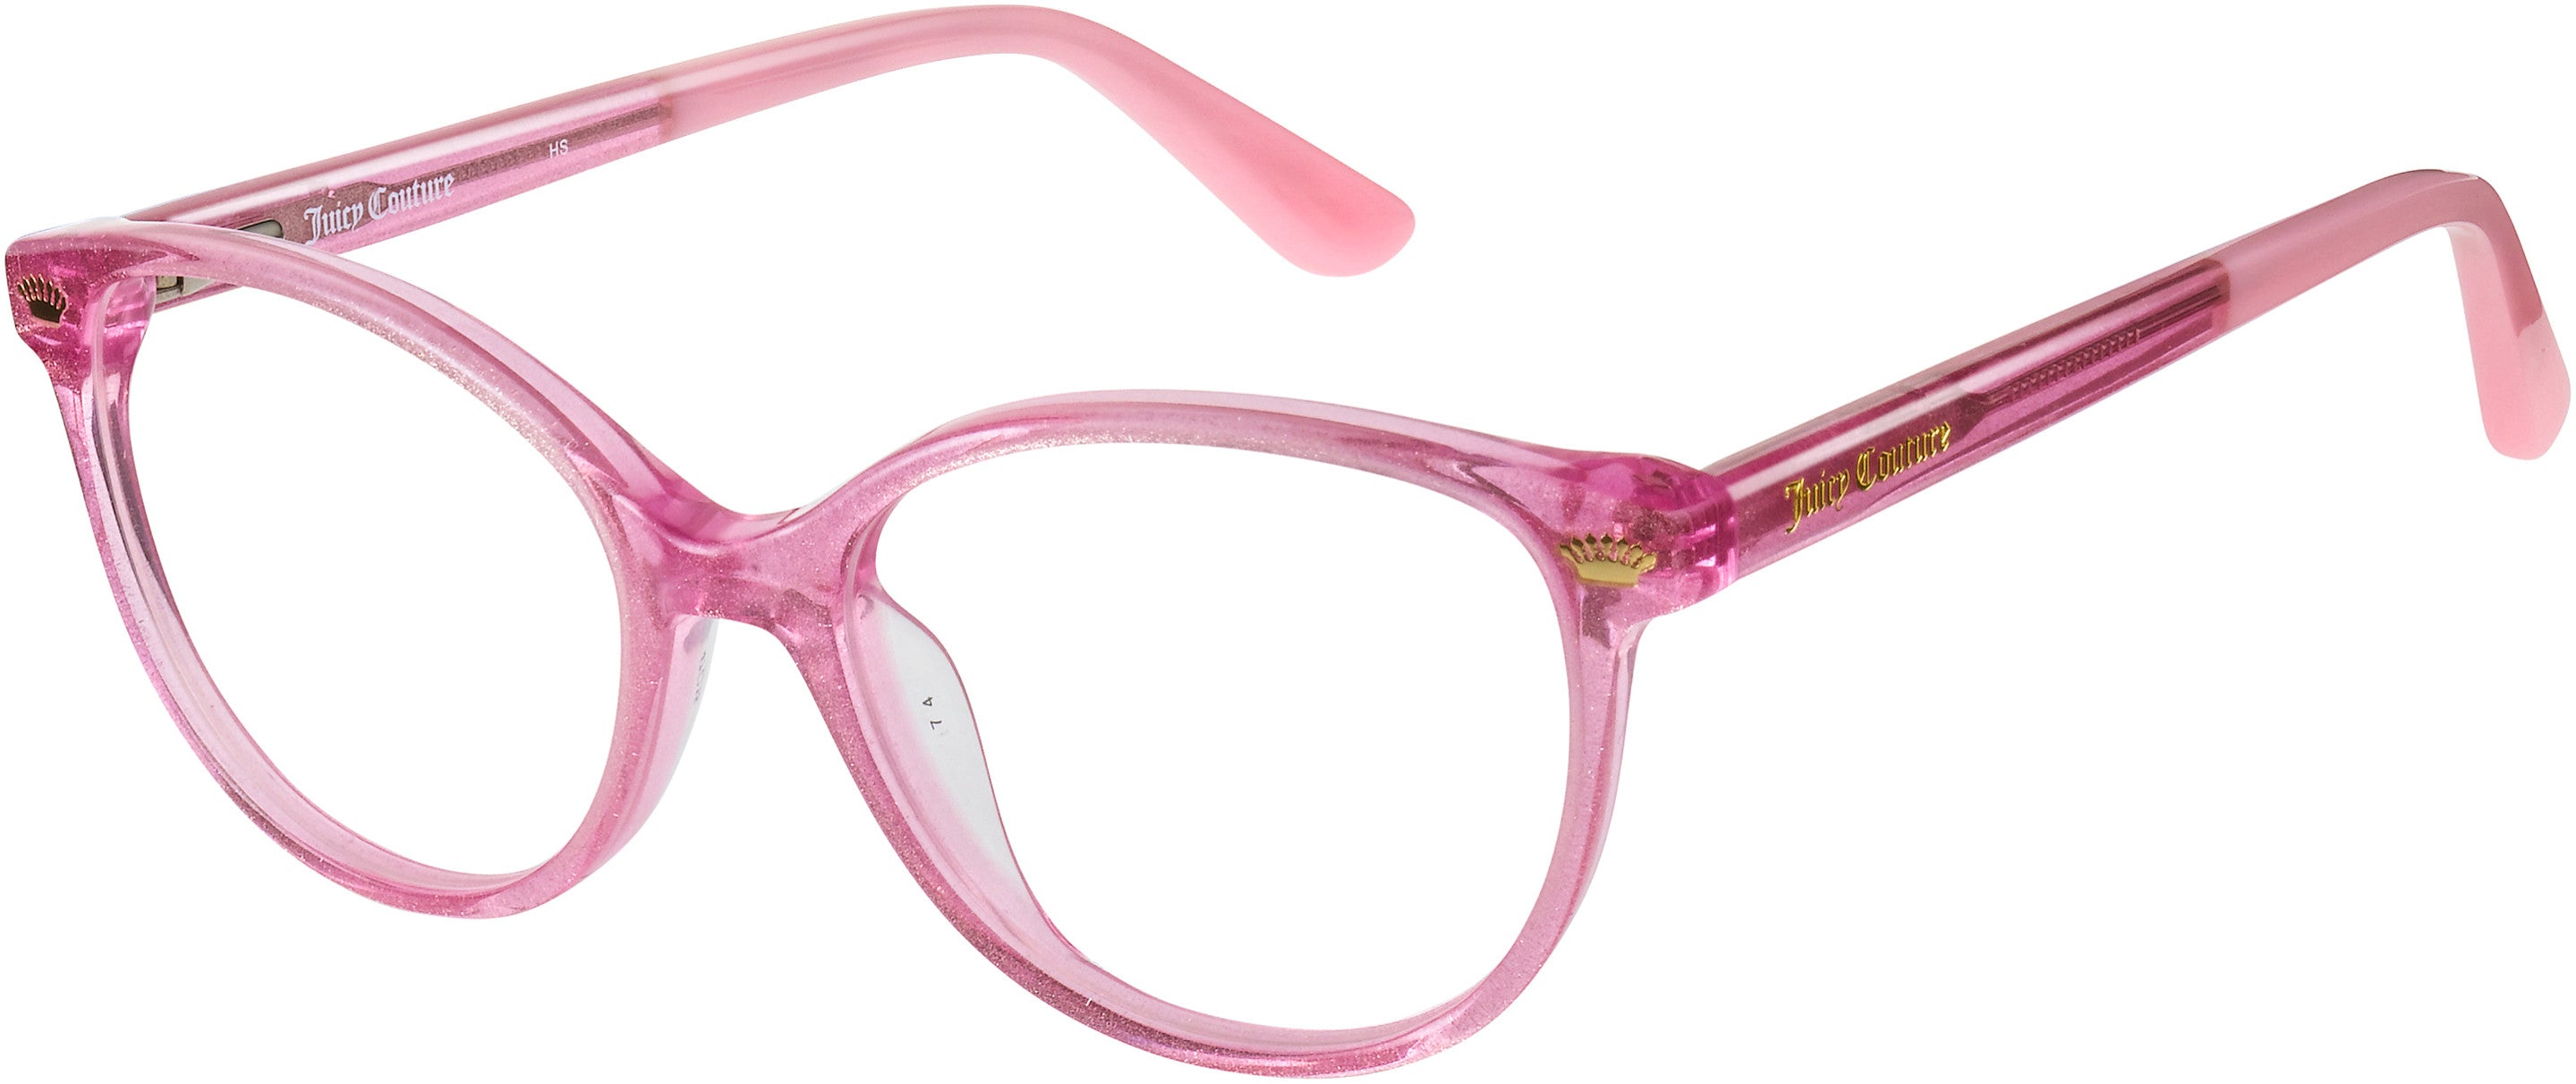 Juicy Couture Juicy 932 Cat Eye/butterfly Eyeglasses 0W66-0W66  Pink Glitter (00 Demo Lens)